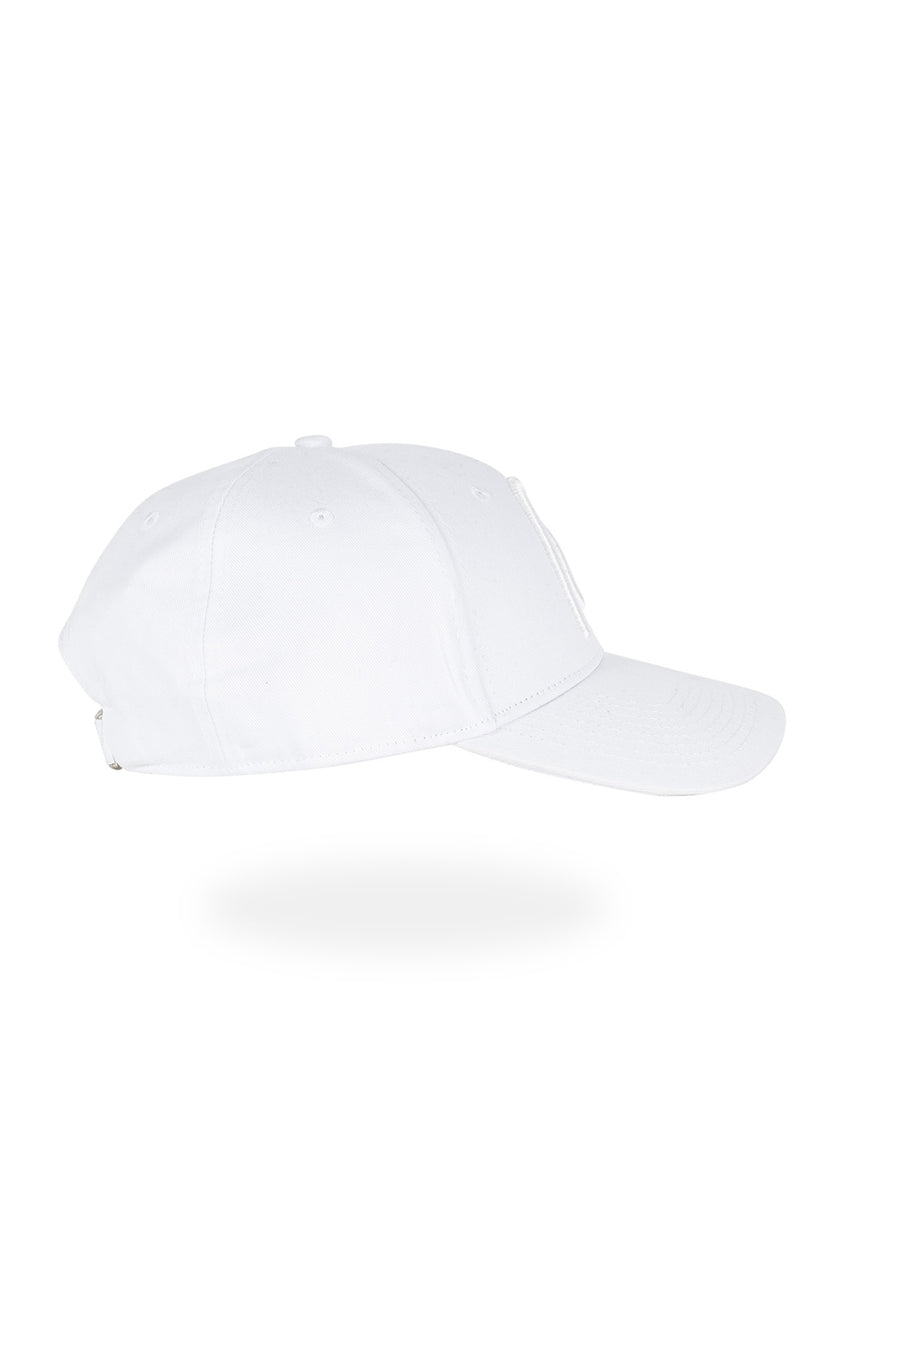 Rewired Classic Baseball Cap- White